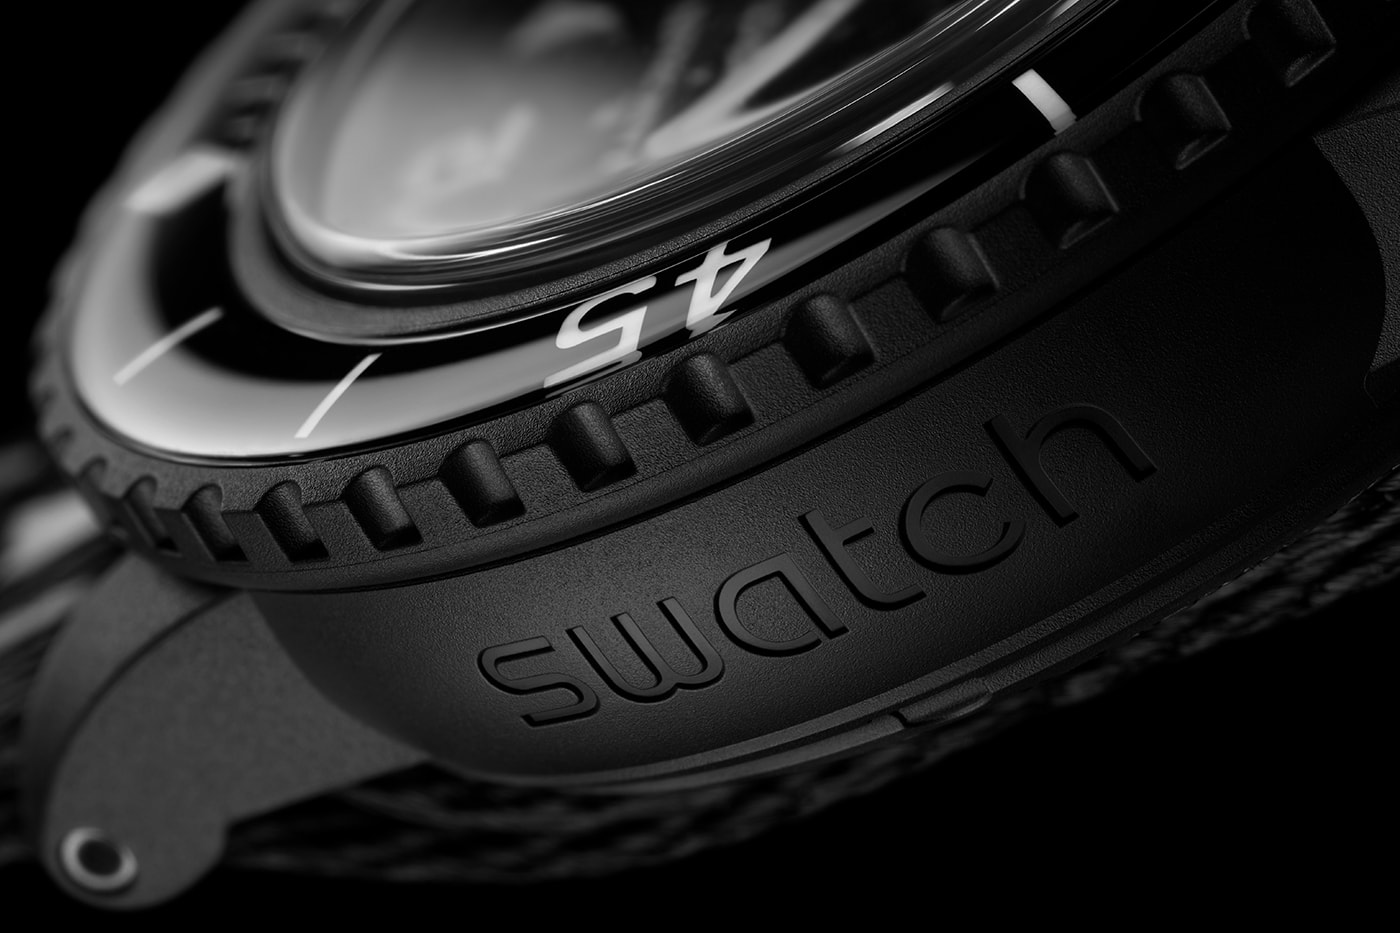 Blancpain x Swatch Bioceramic Scuba Fifty Fathoms OCEAN OF STORMS Release Info